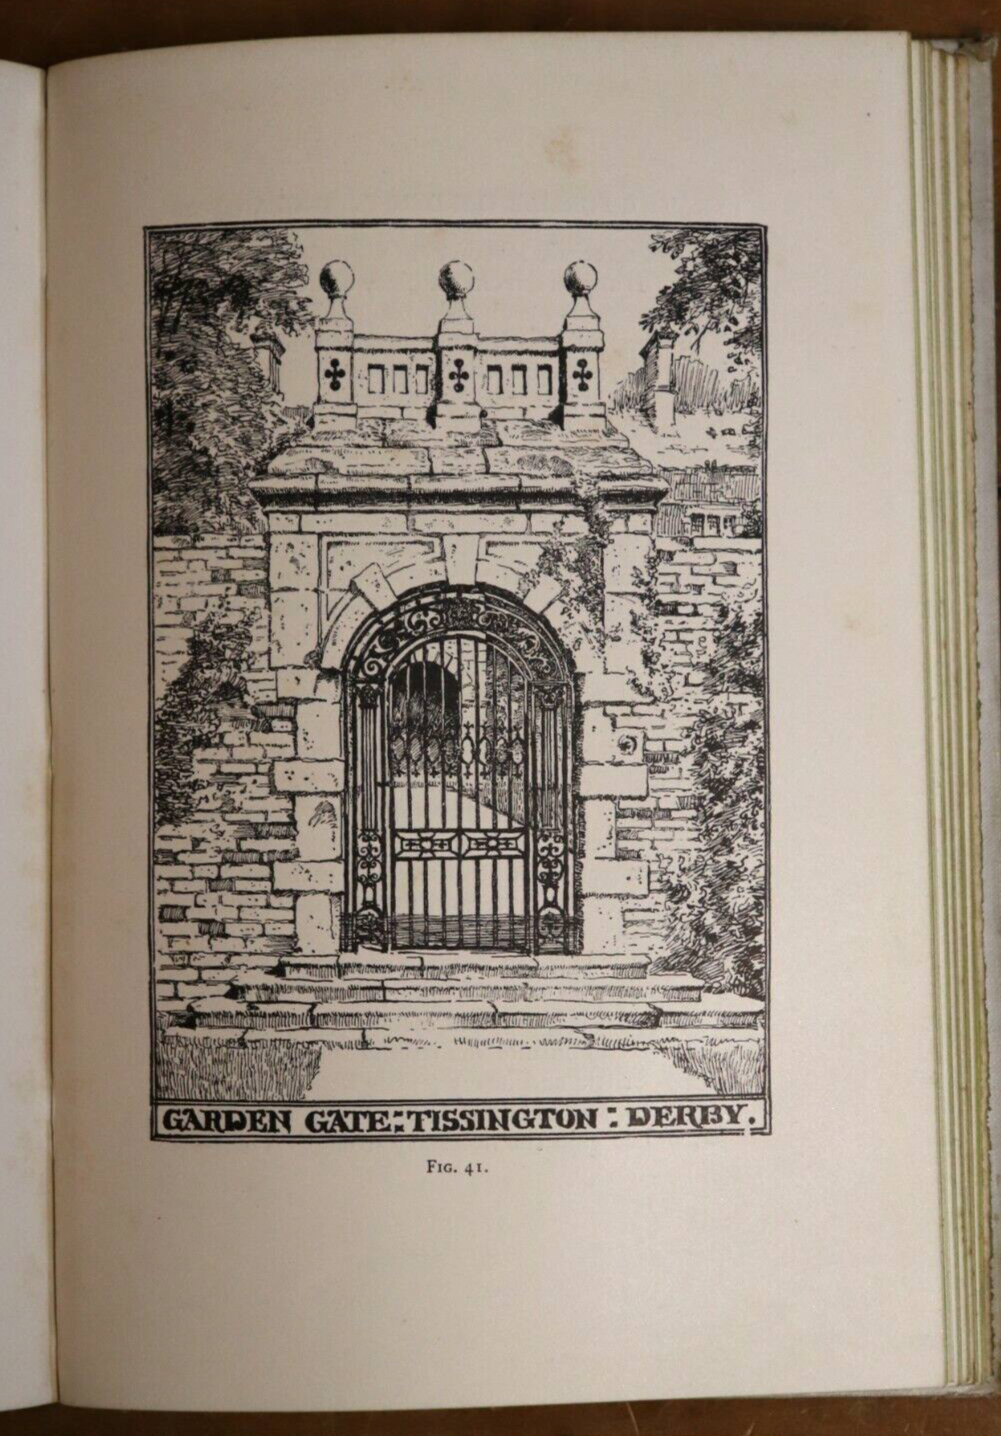 1901 The Formal Garden In England by R. Blomfield Architectural Garden Book